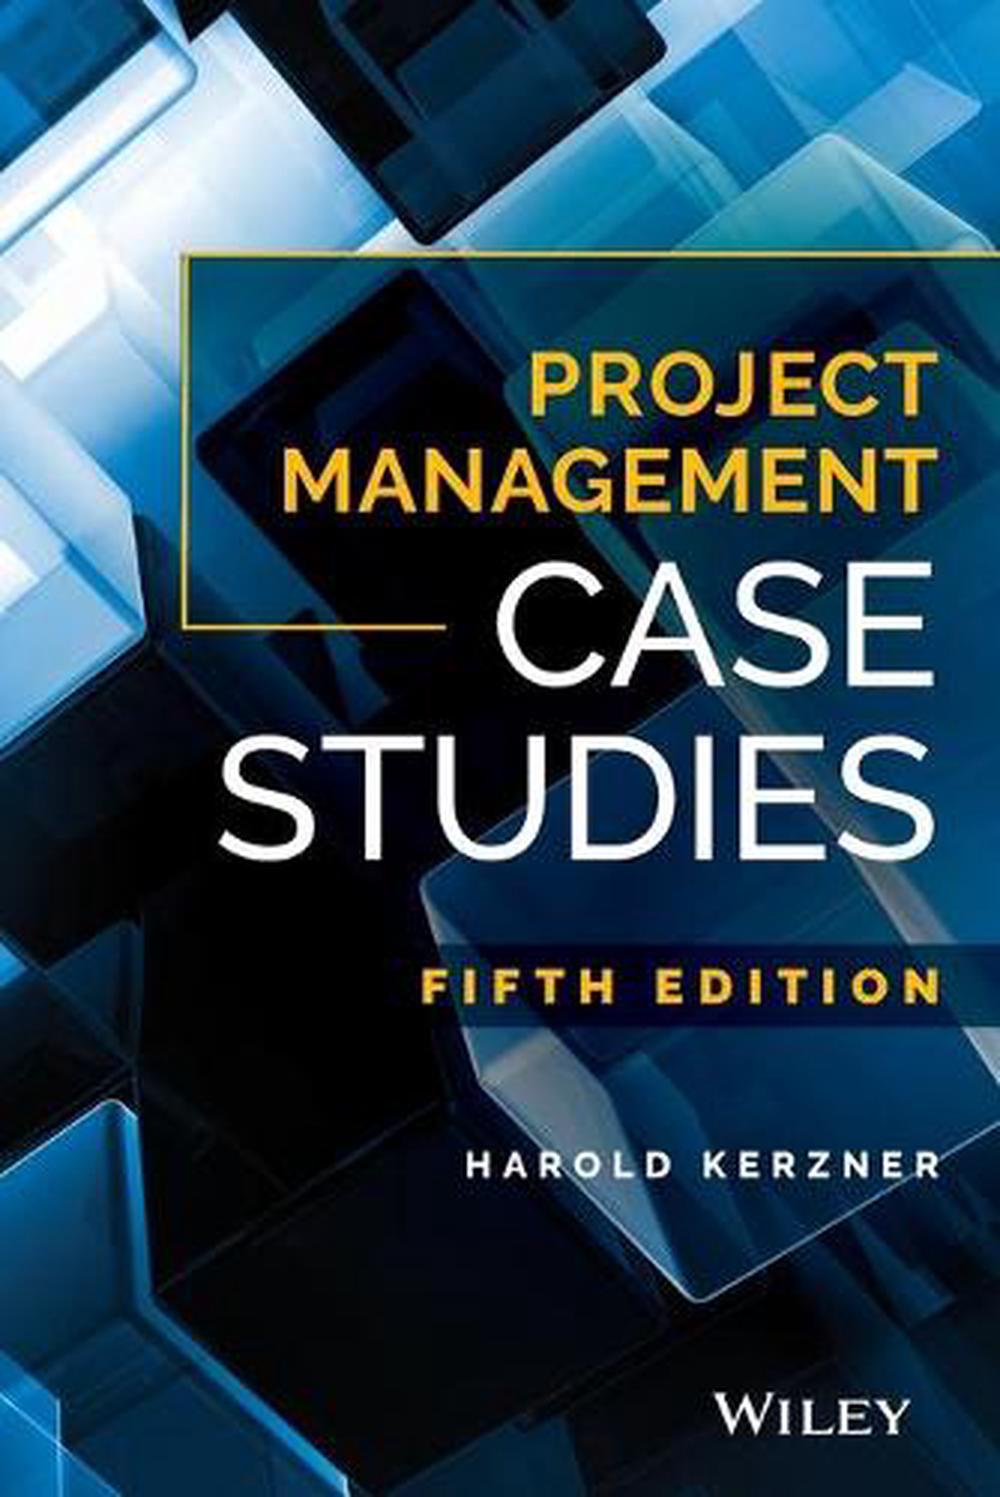 Project Management Case Studies, Fifth Edition by Harold Kerzner Paperback Book 9781119385974 eBay